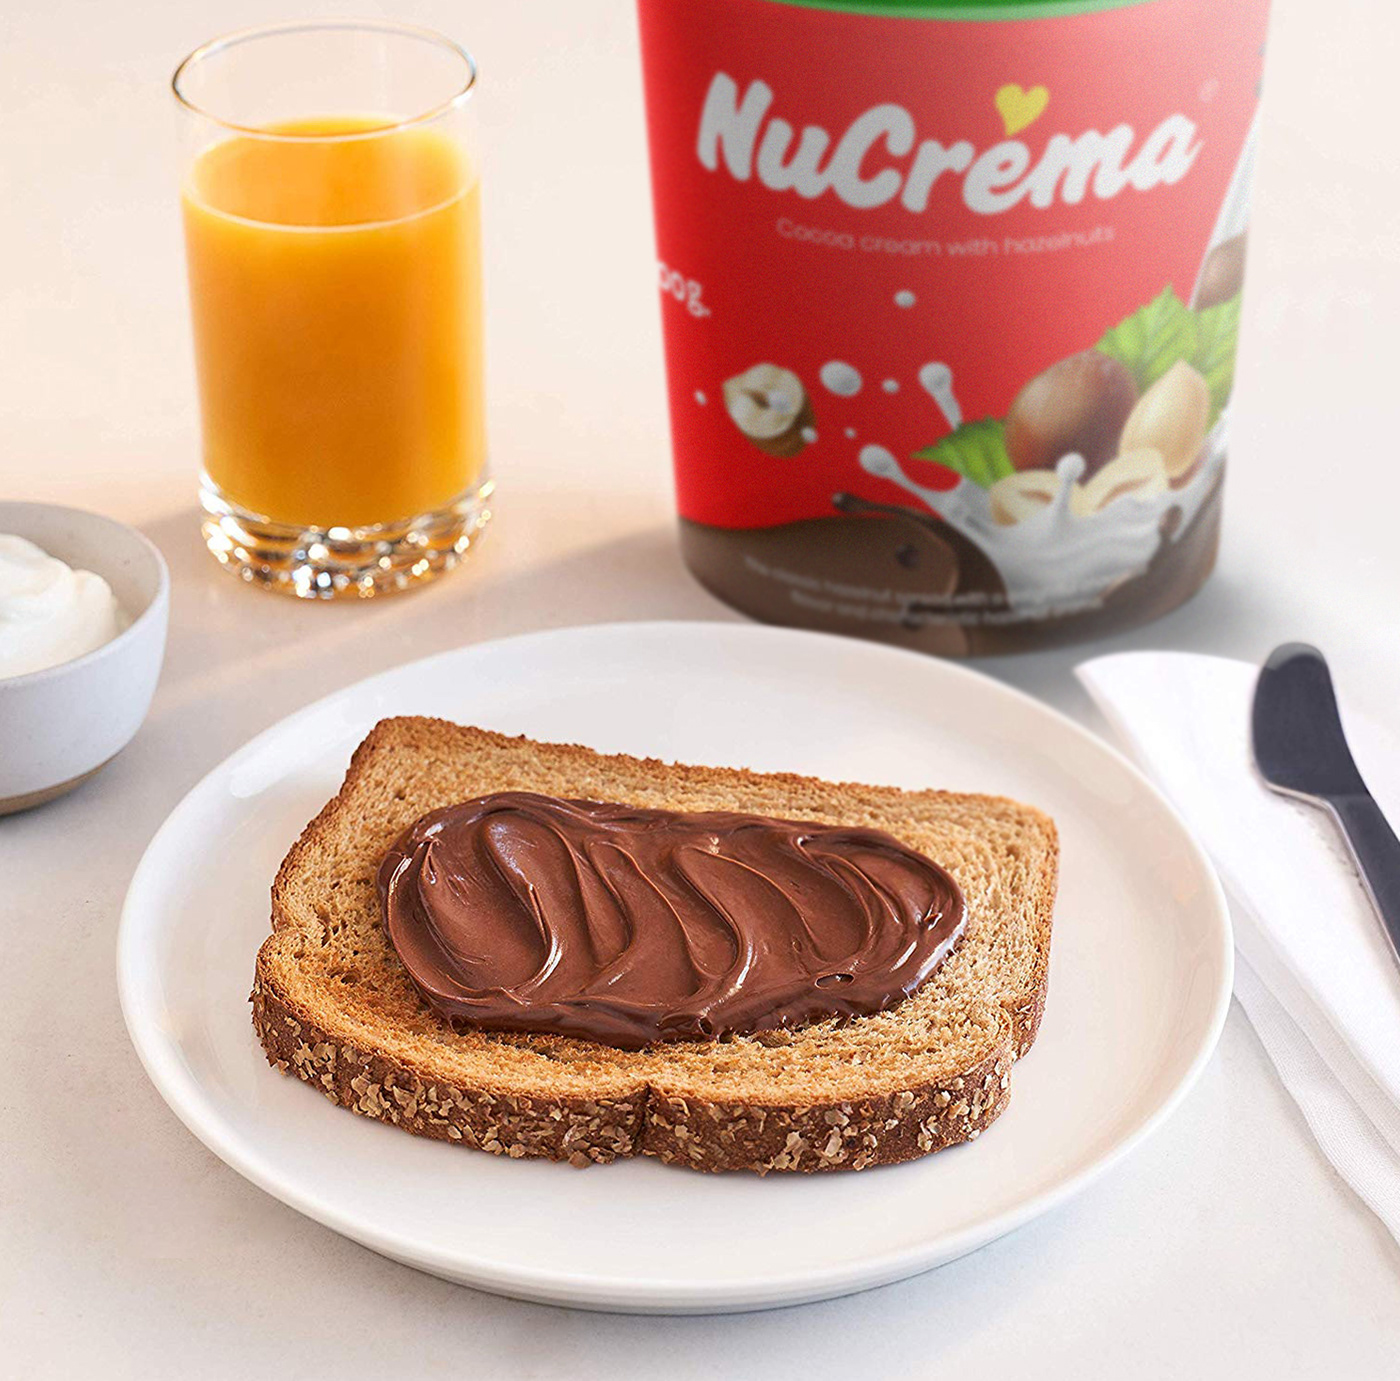 chocolate nutella spread hazelnut Packaging Nucrema modern red identity Cadbury